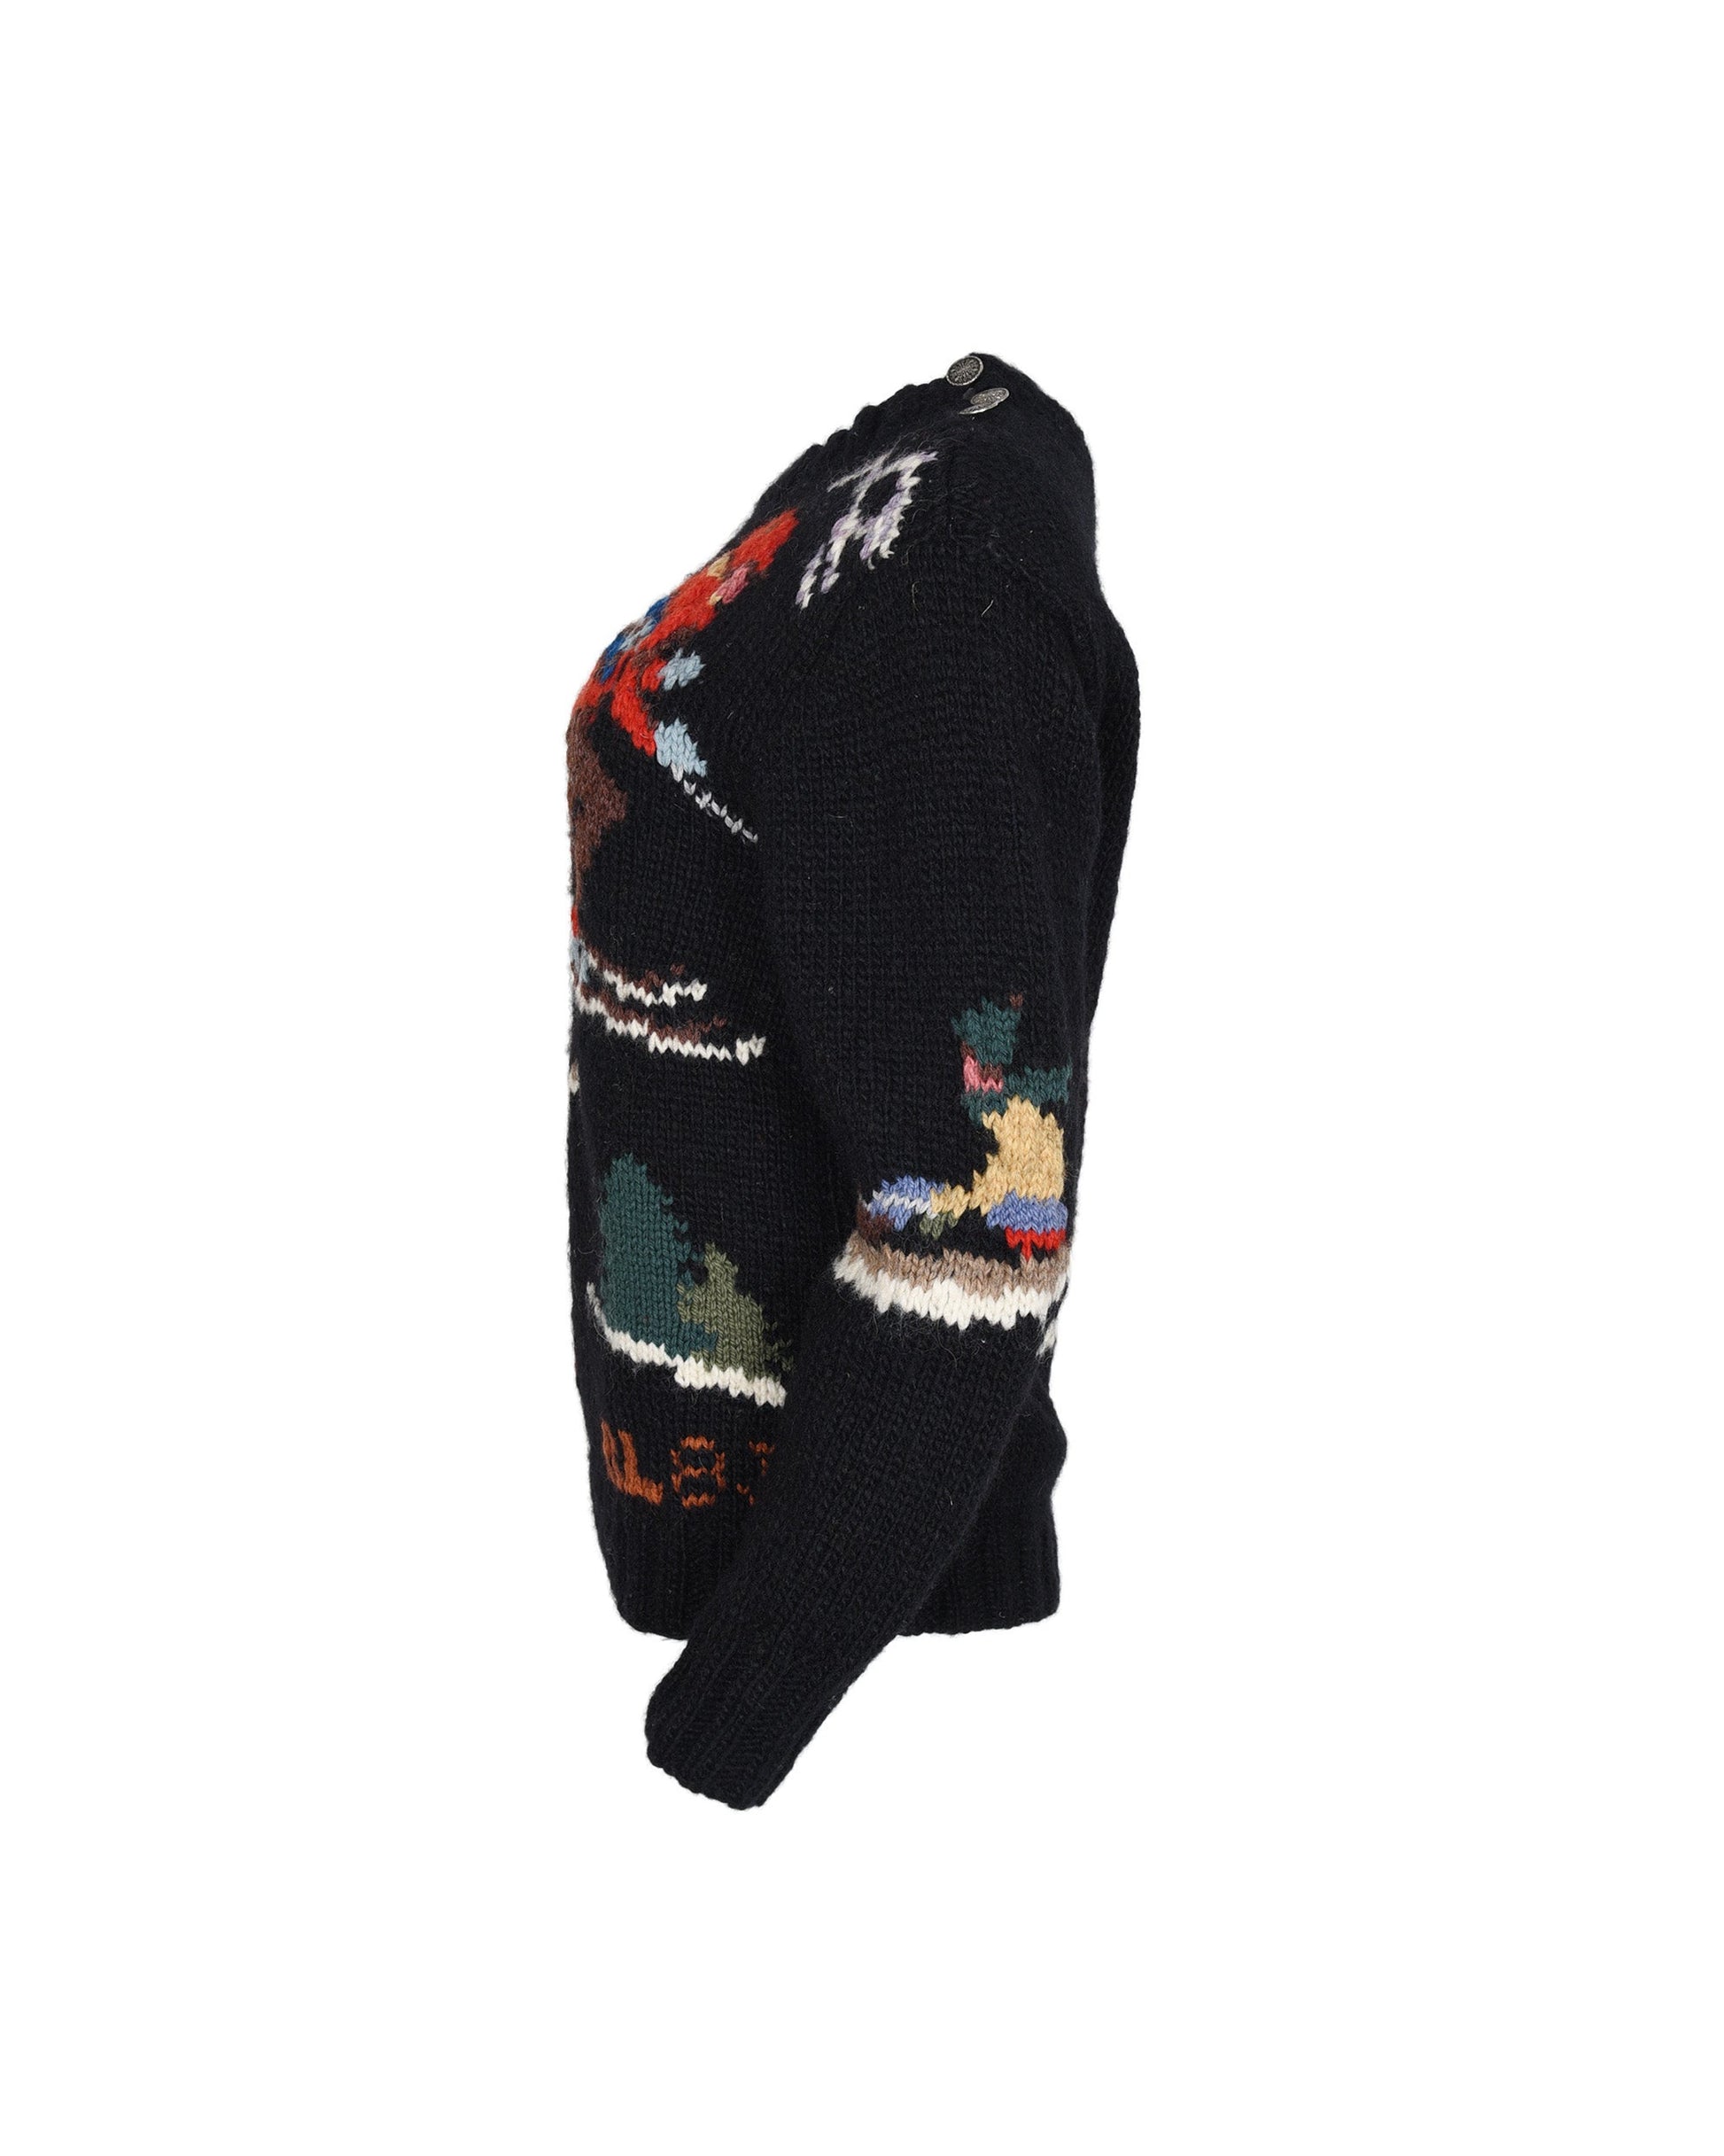 Ralph Lauren Black Wool Sweater with Ski Detail. Shoulder: 18", Bust: 17", Waist: 16"